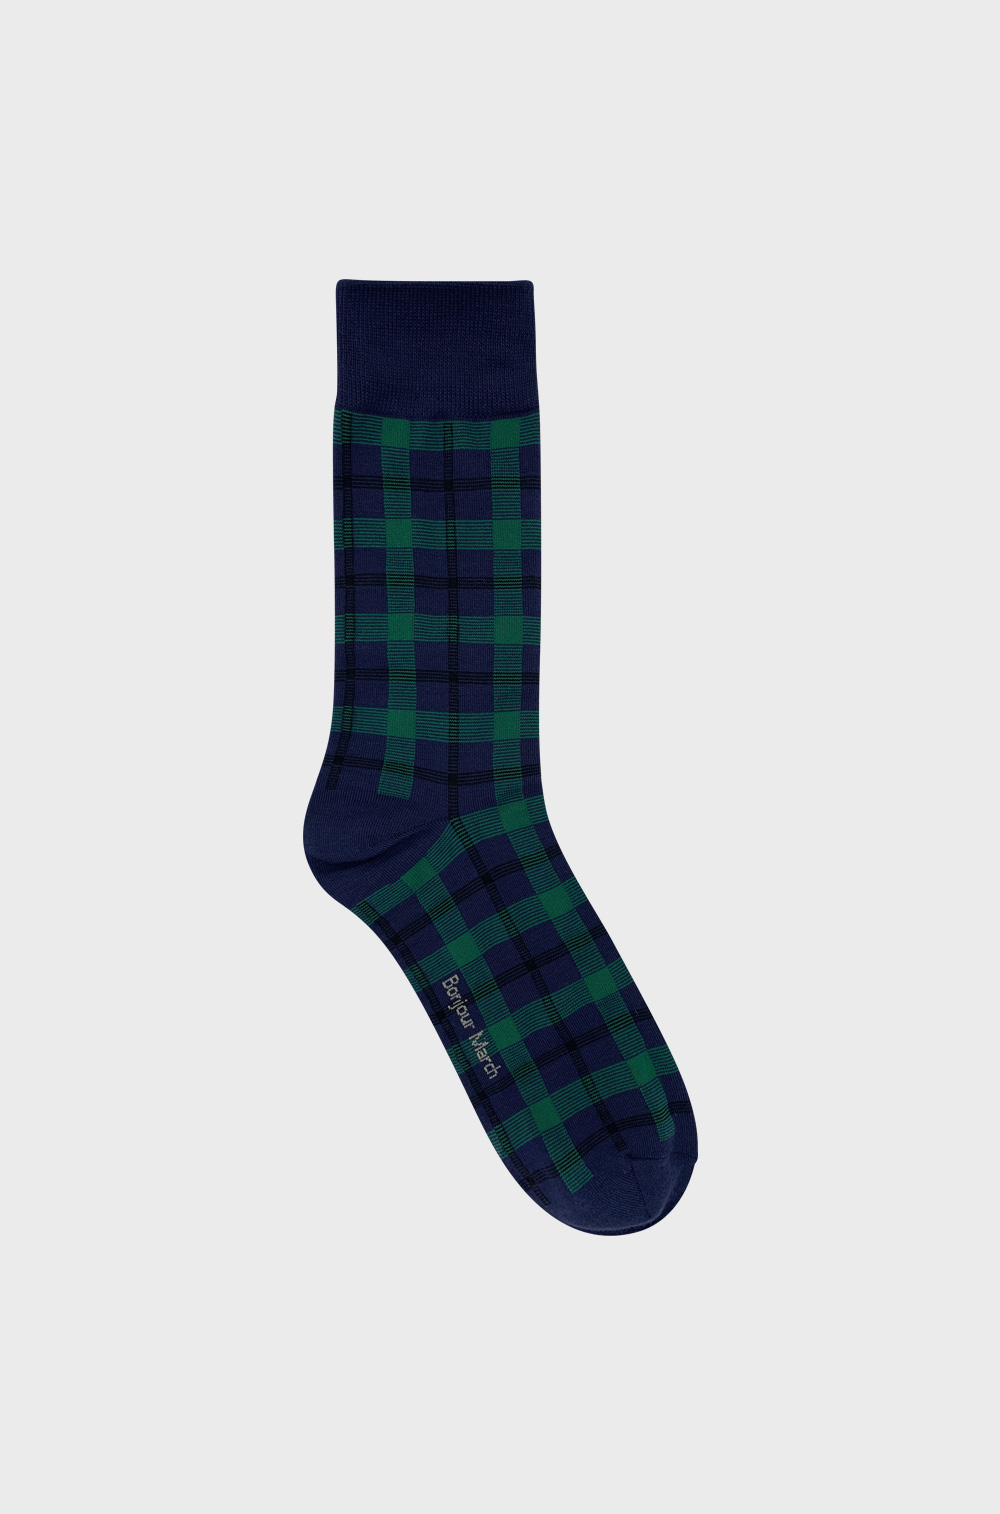 Scottish socks_men